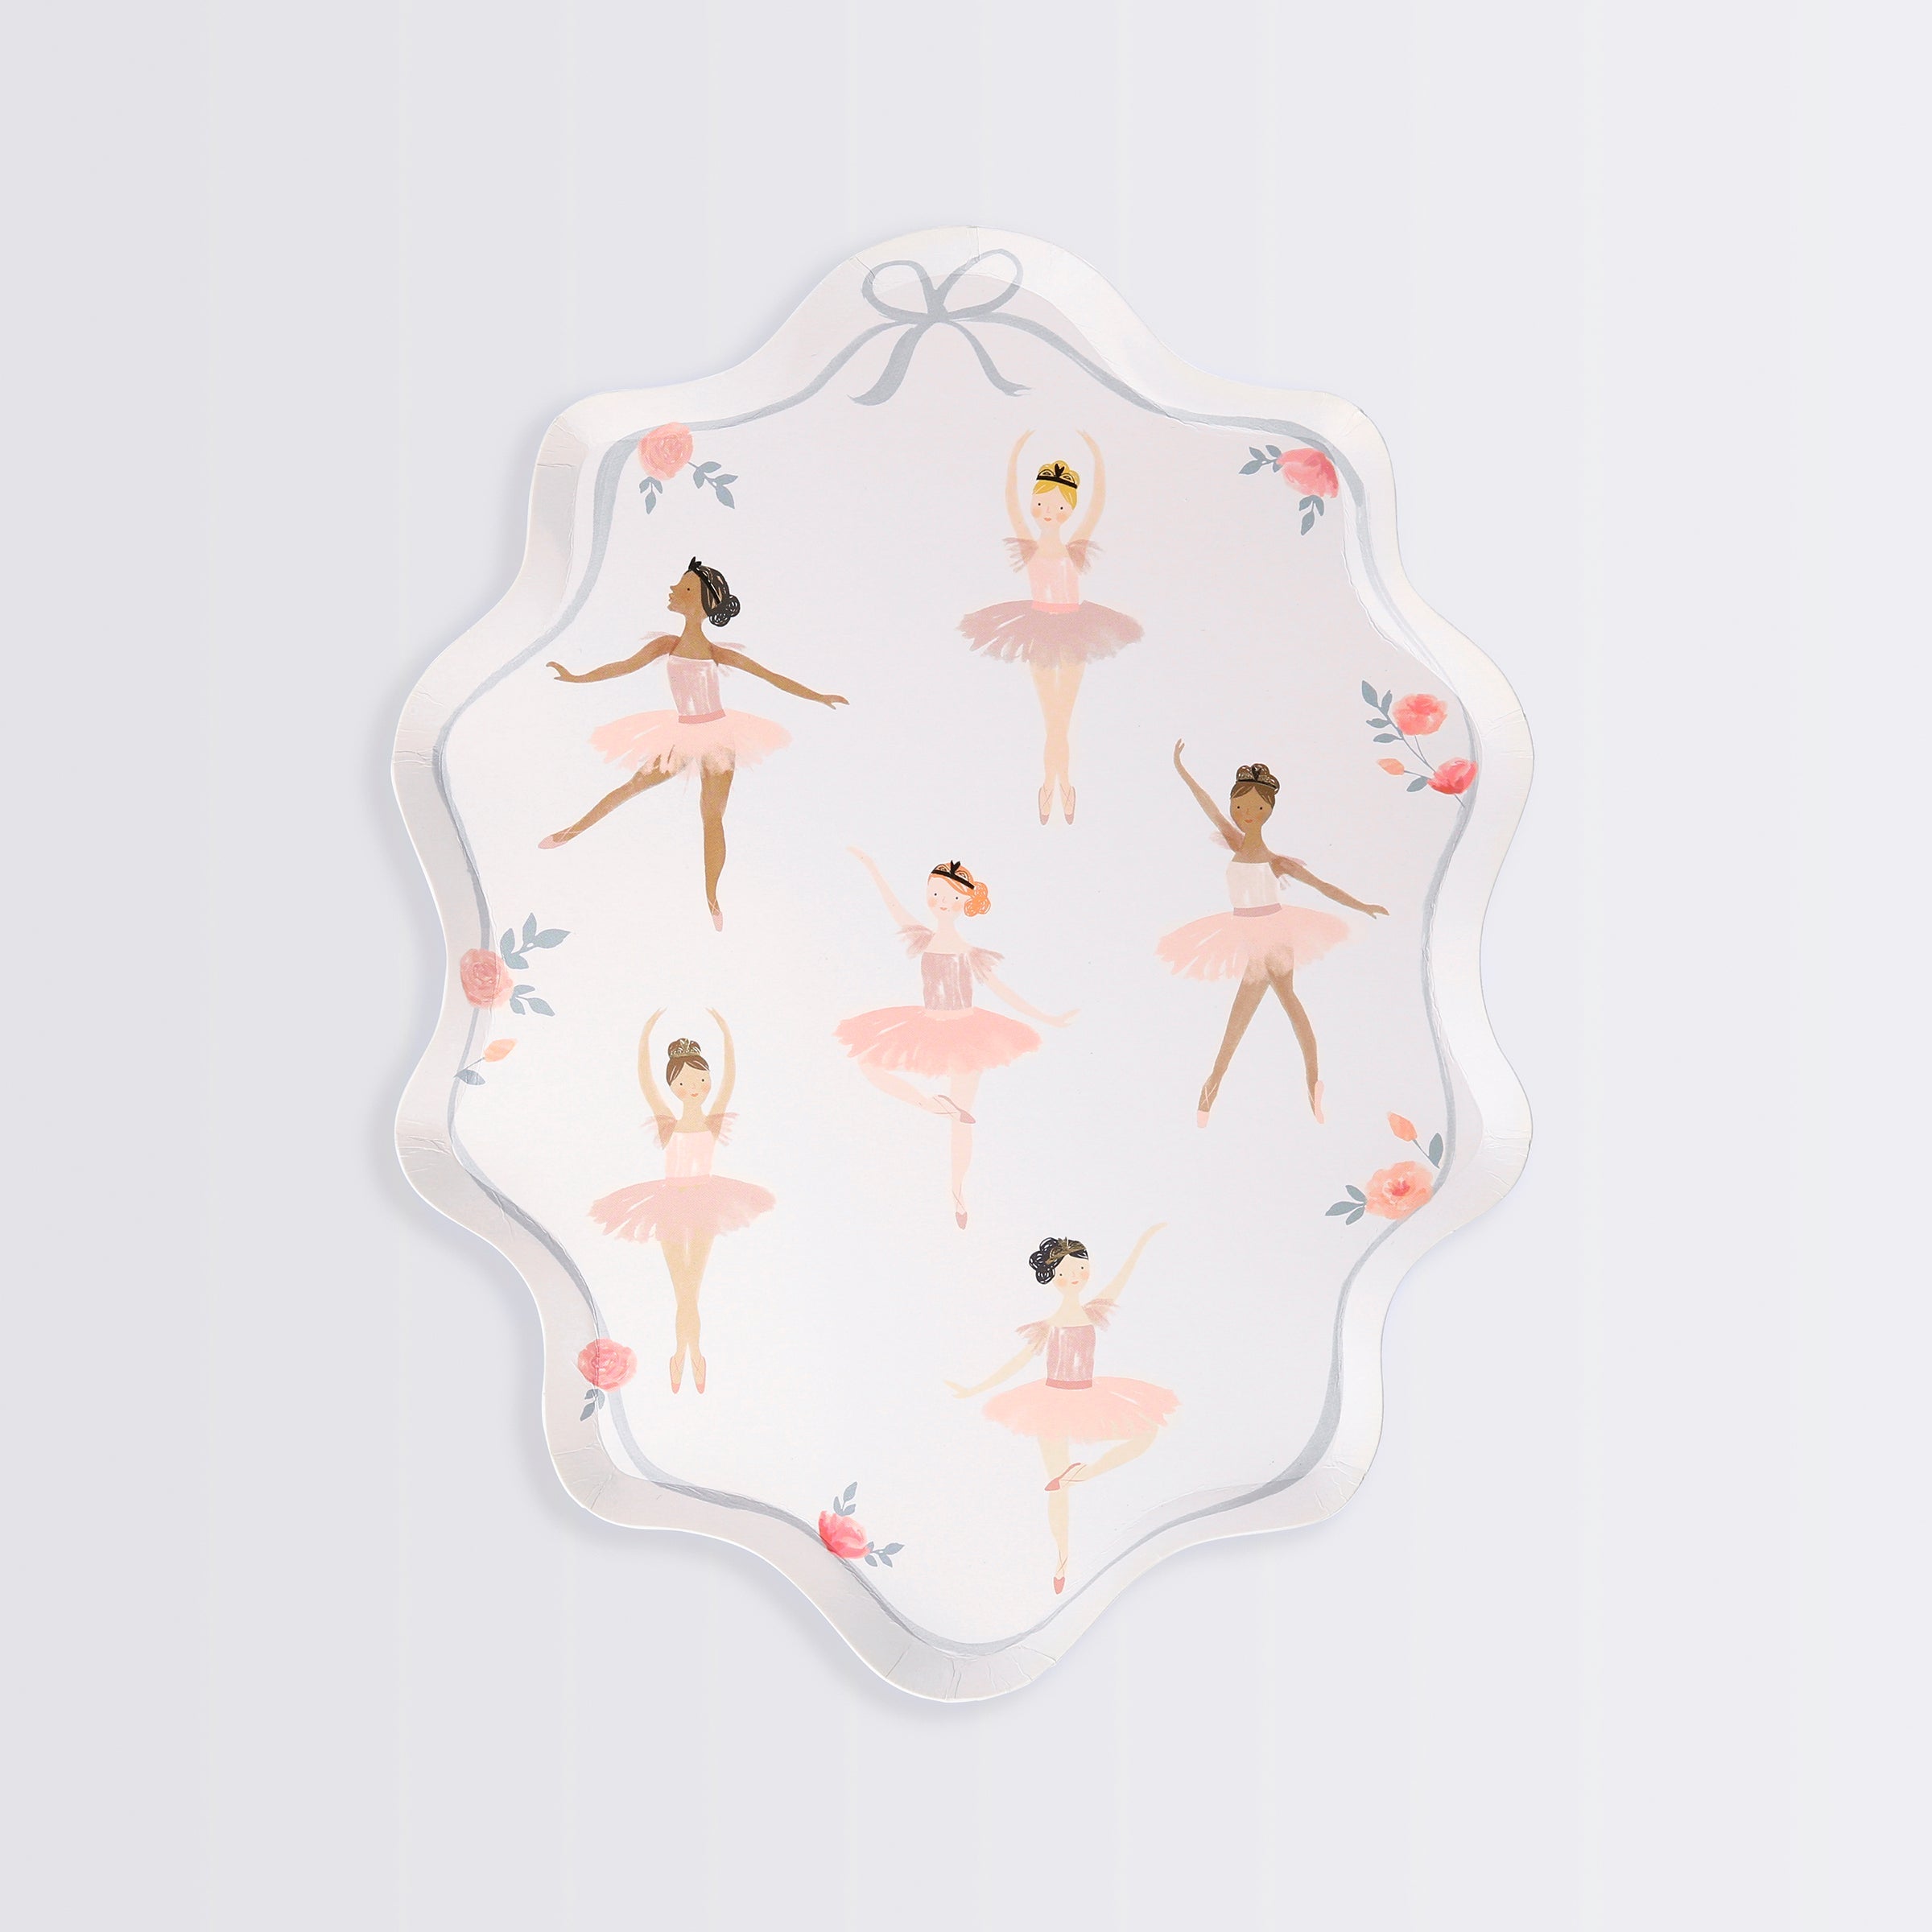 Ballerina Plates(8 Pack)